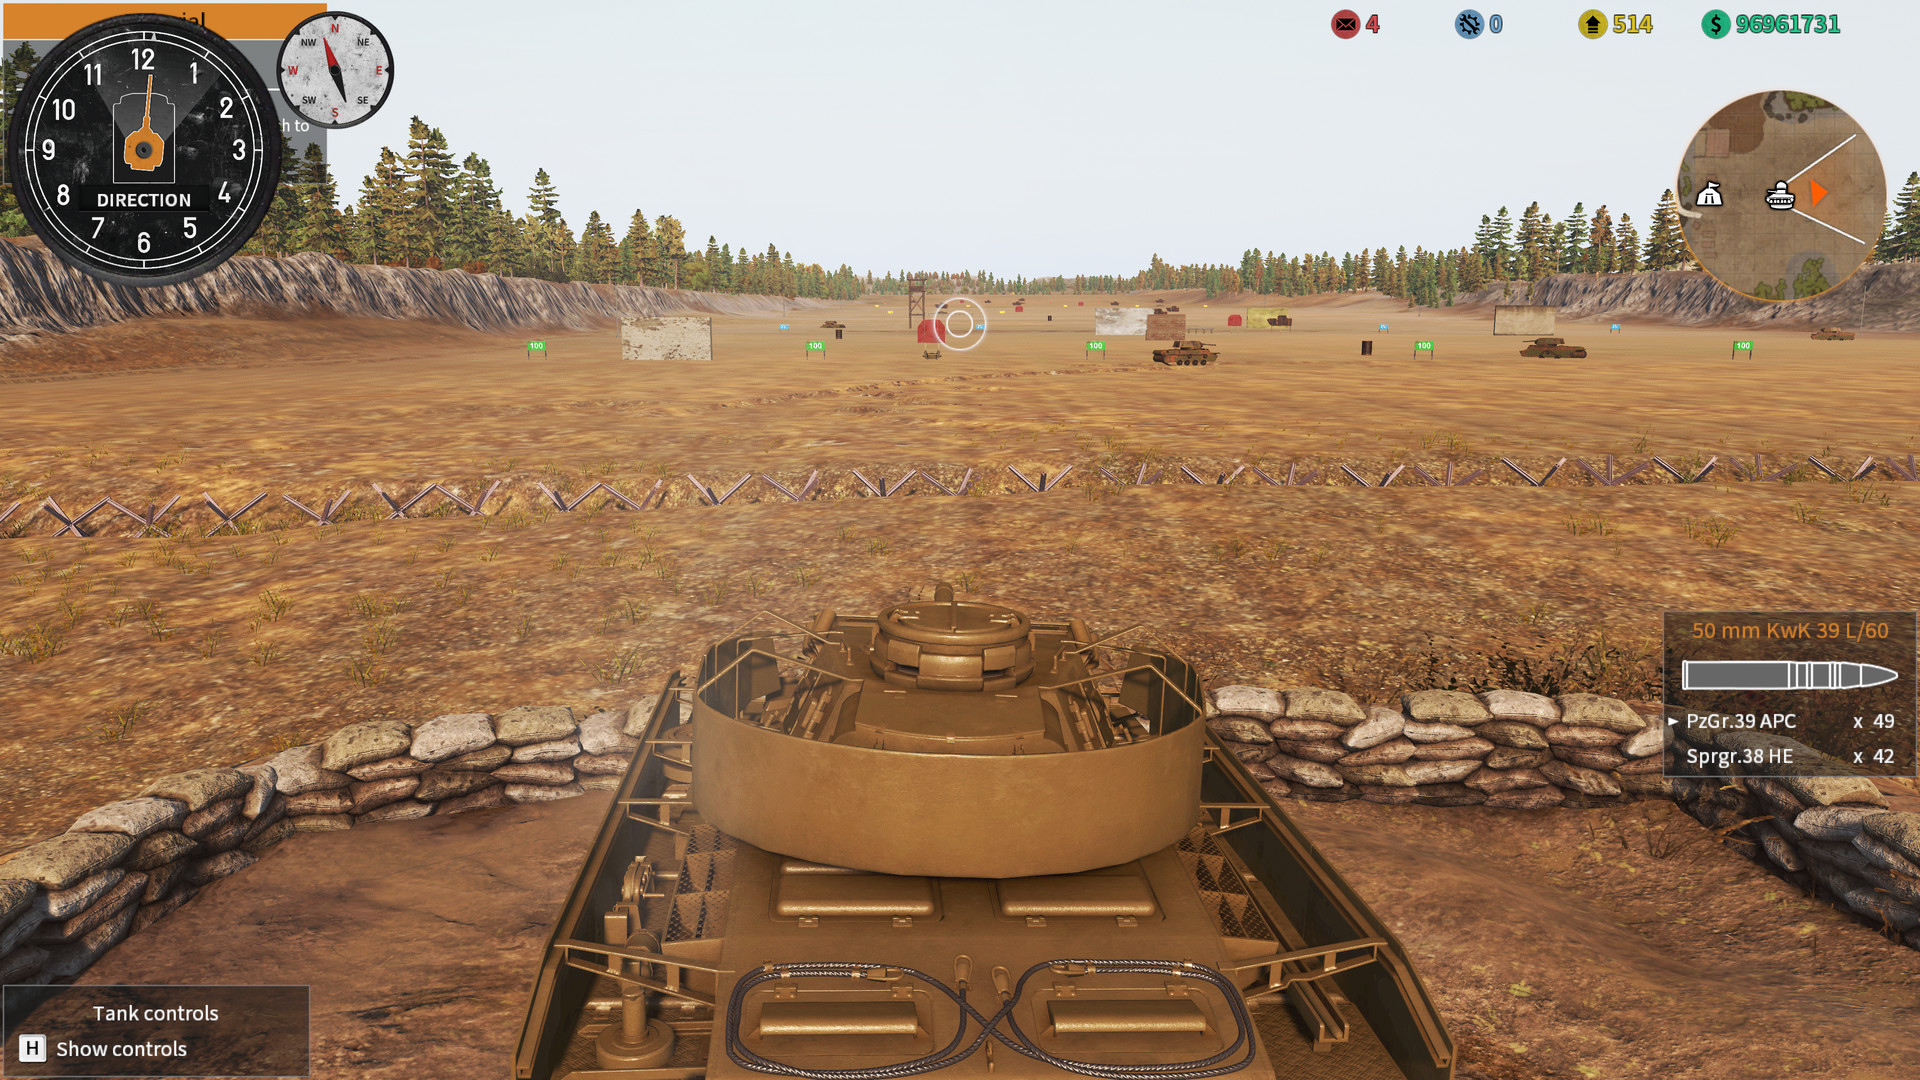 Tank Mechanic Simulator Free Download